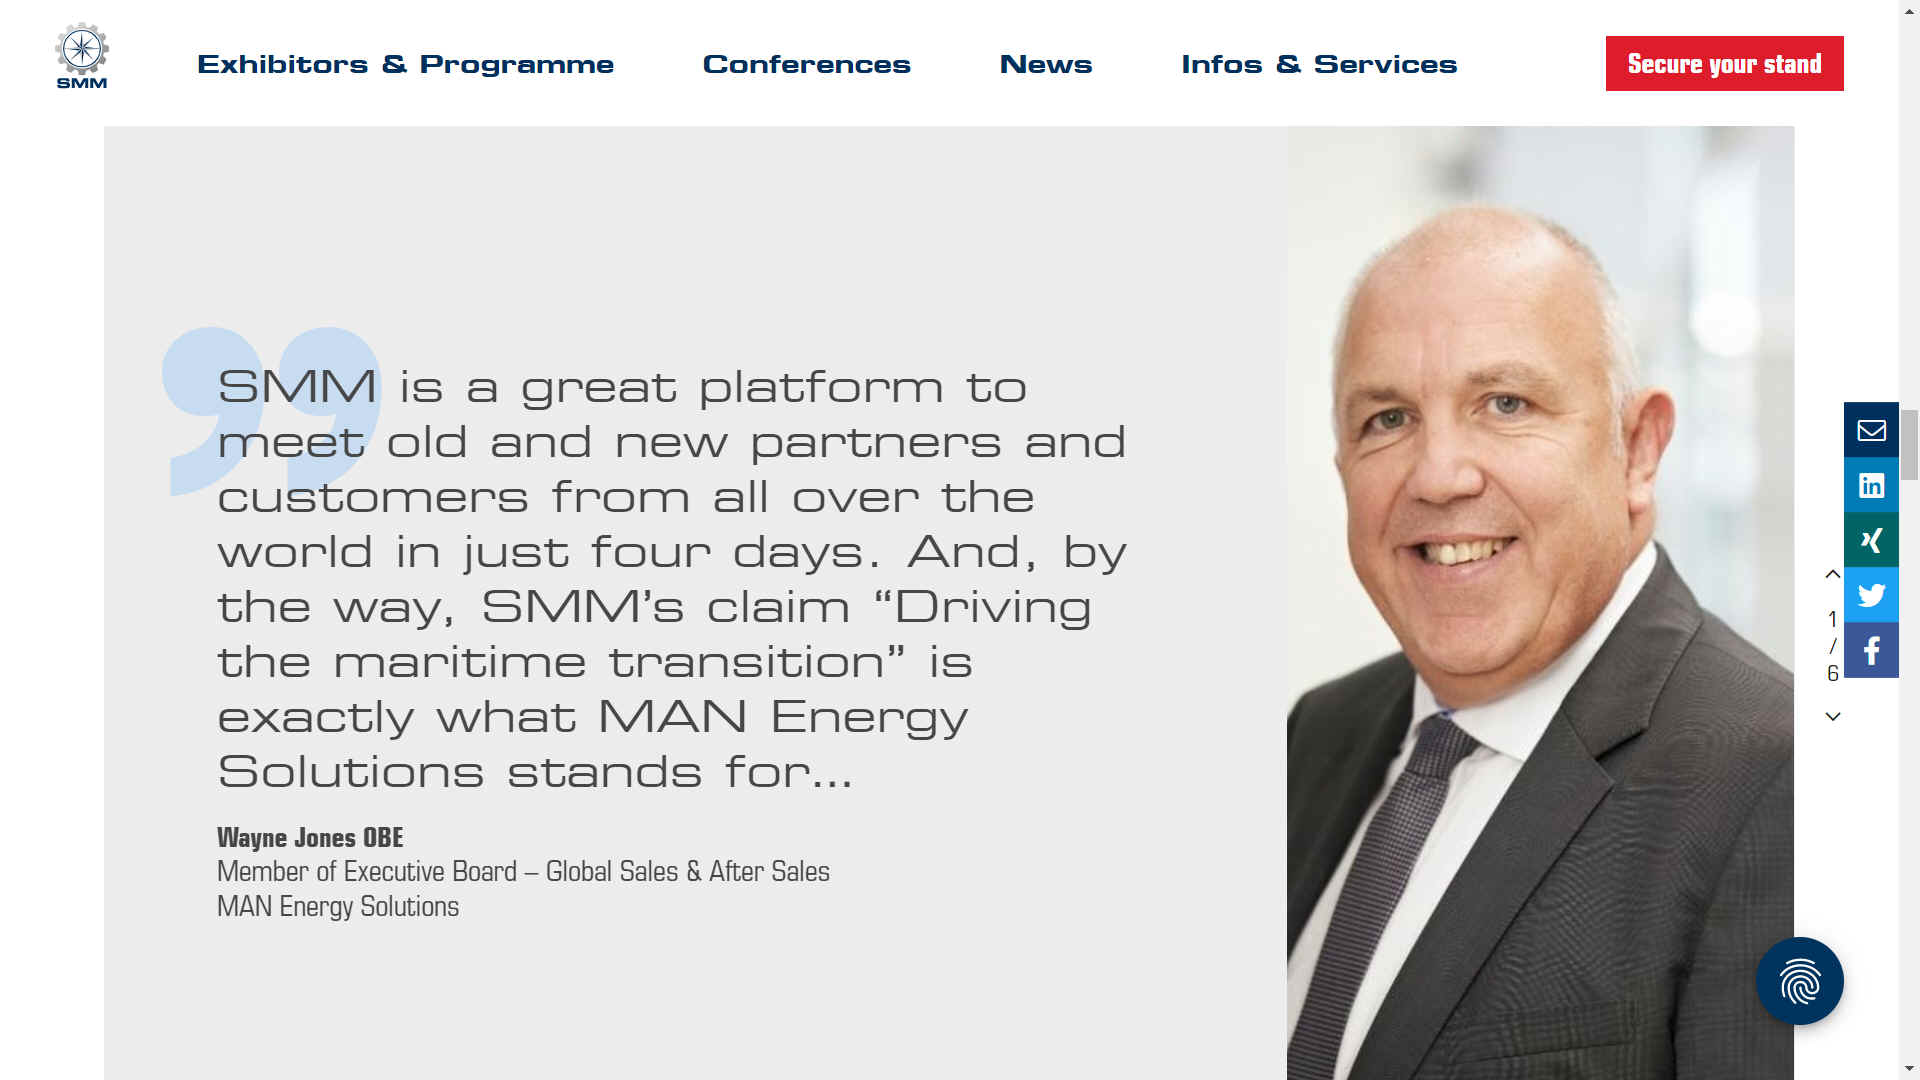 Wayne Jones OBE - Member Executive Board, Global Sales, MAN Energy Solutions